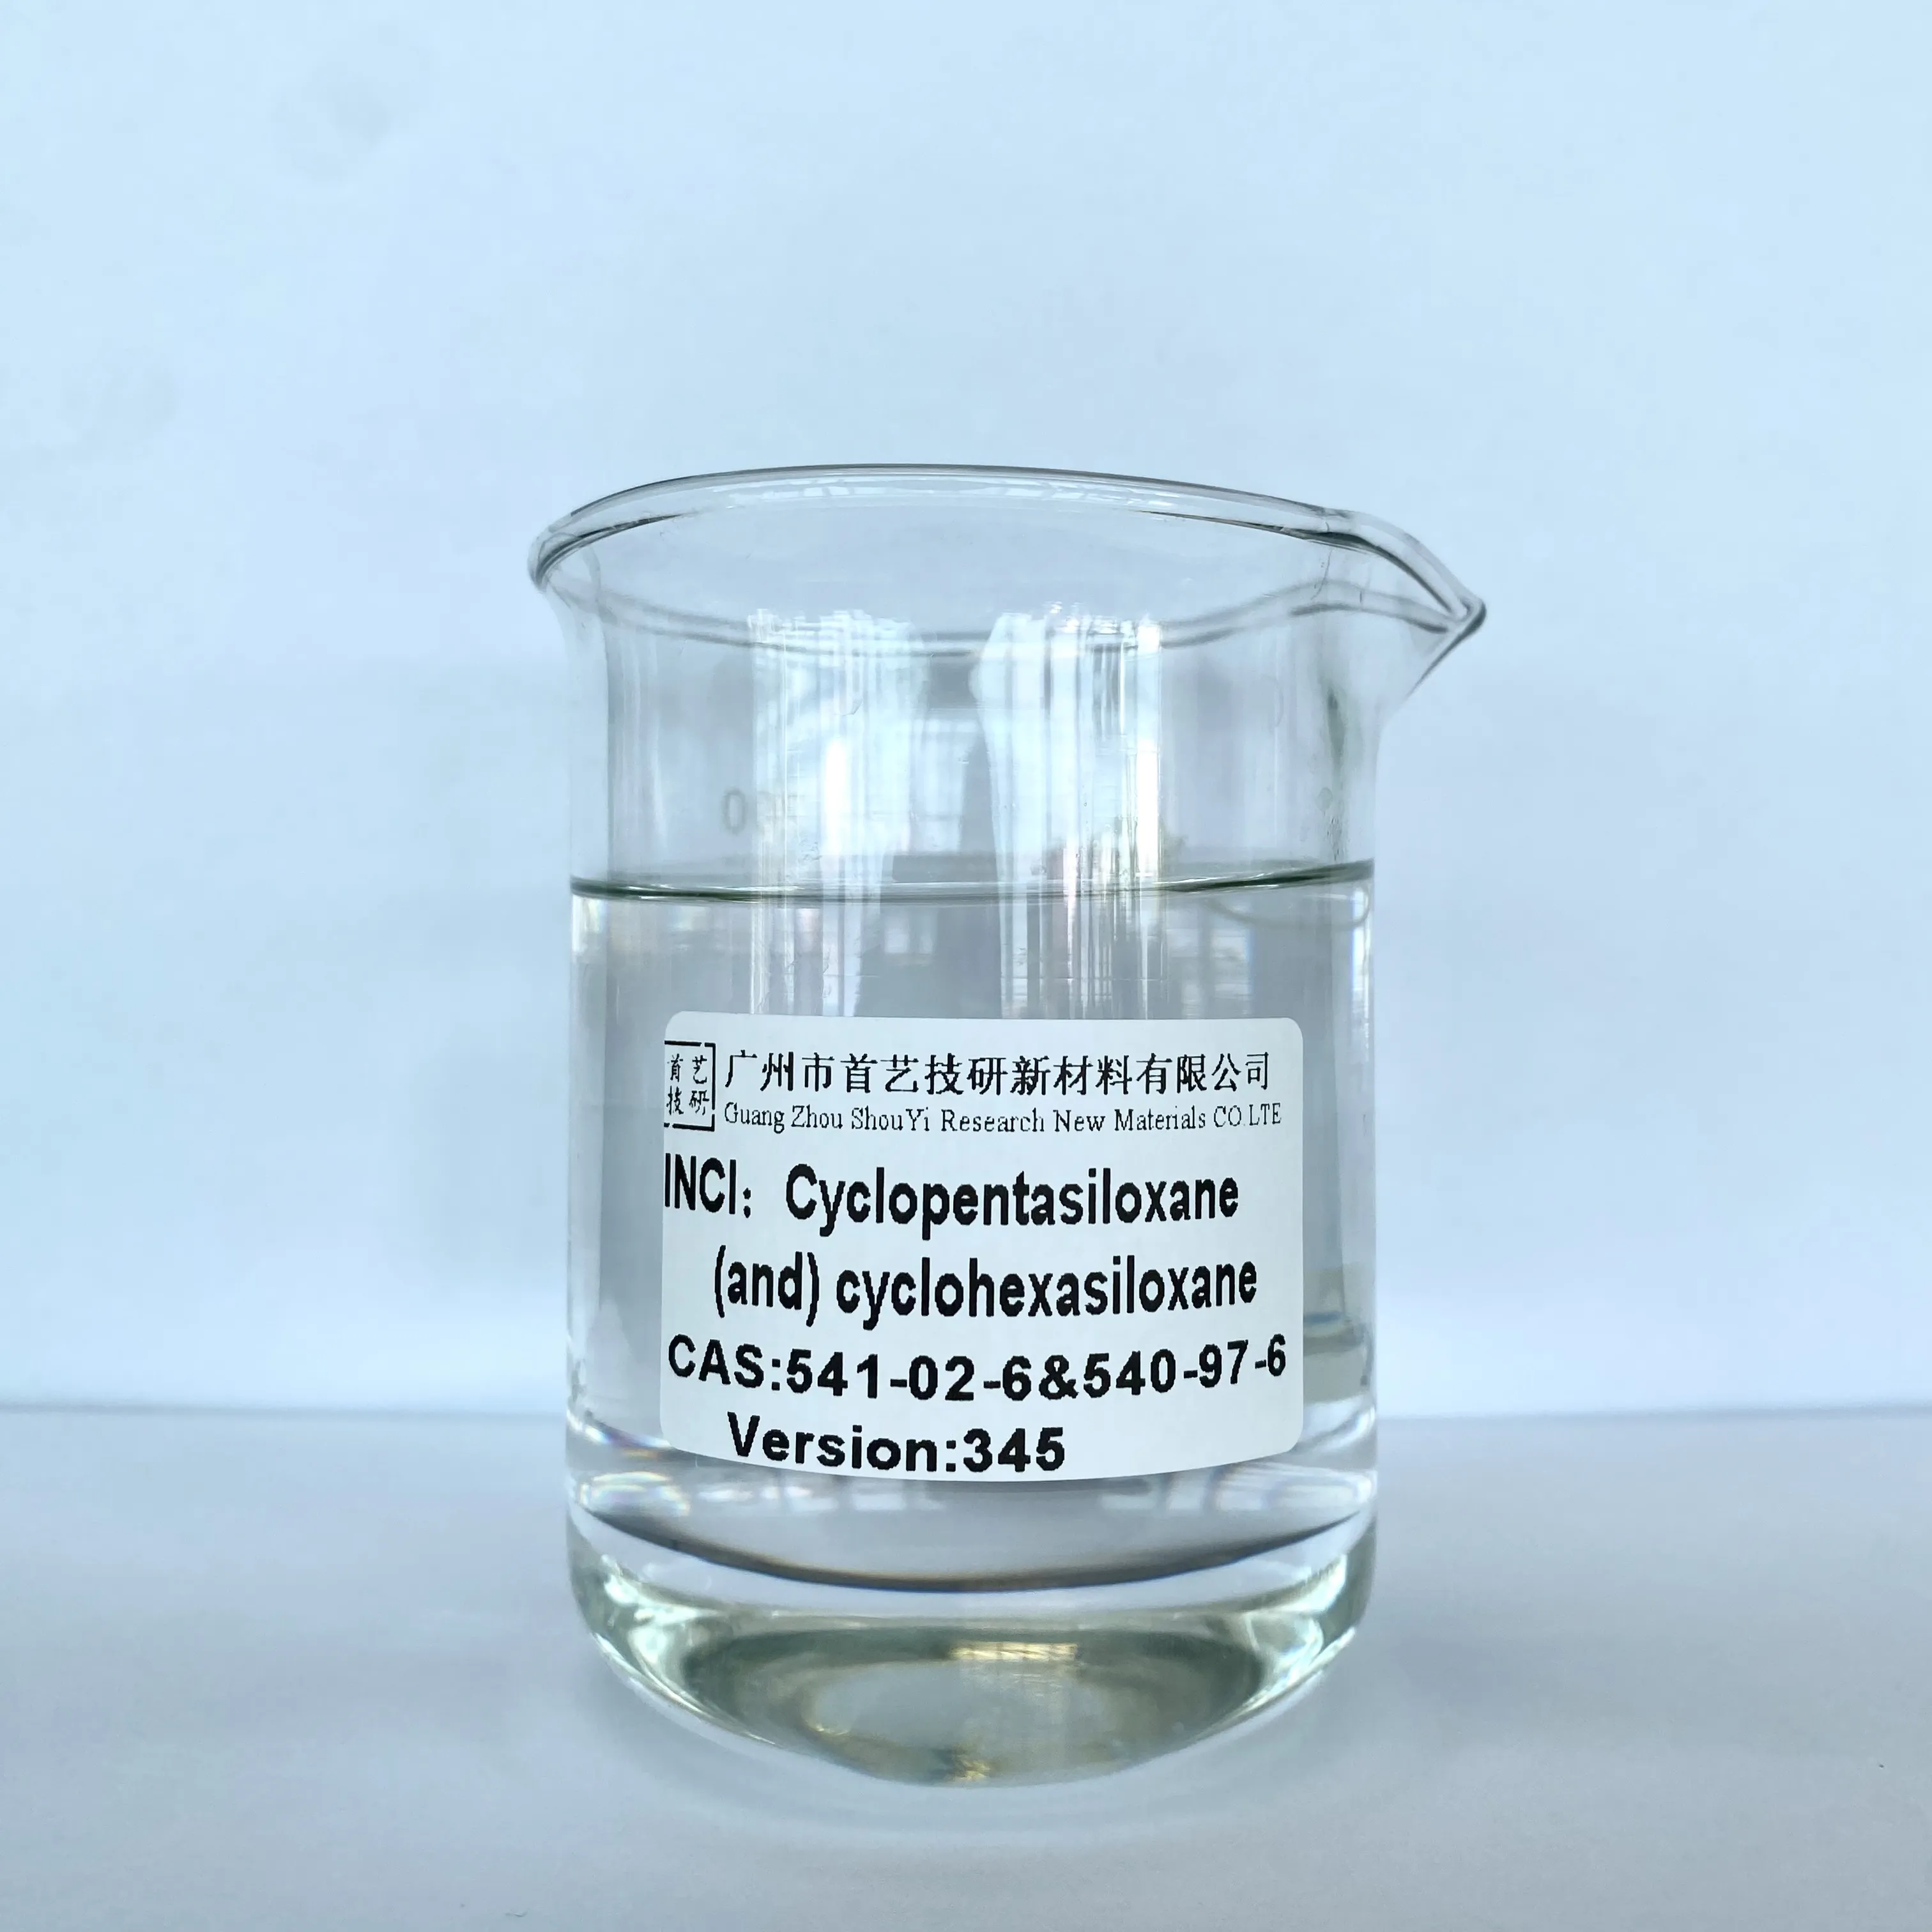 Cyclopentasiloxane (et) cyclohexasiloxane IOTA345CAS matière première cosmétique